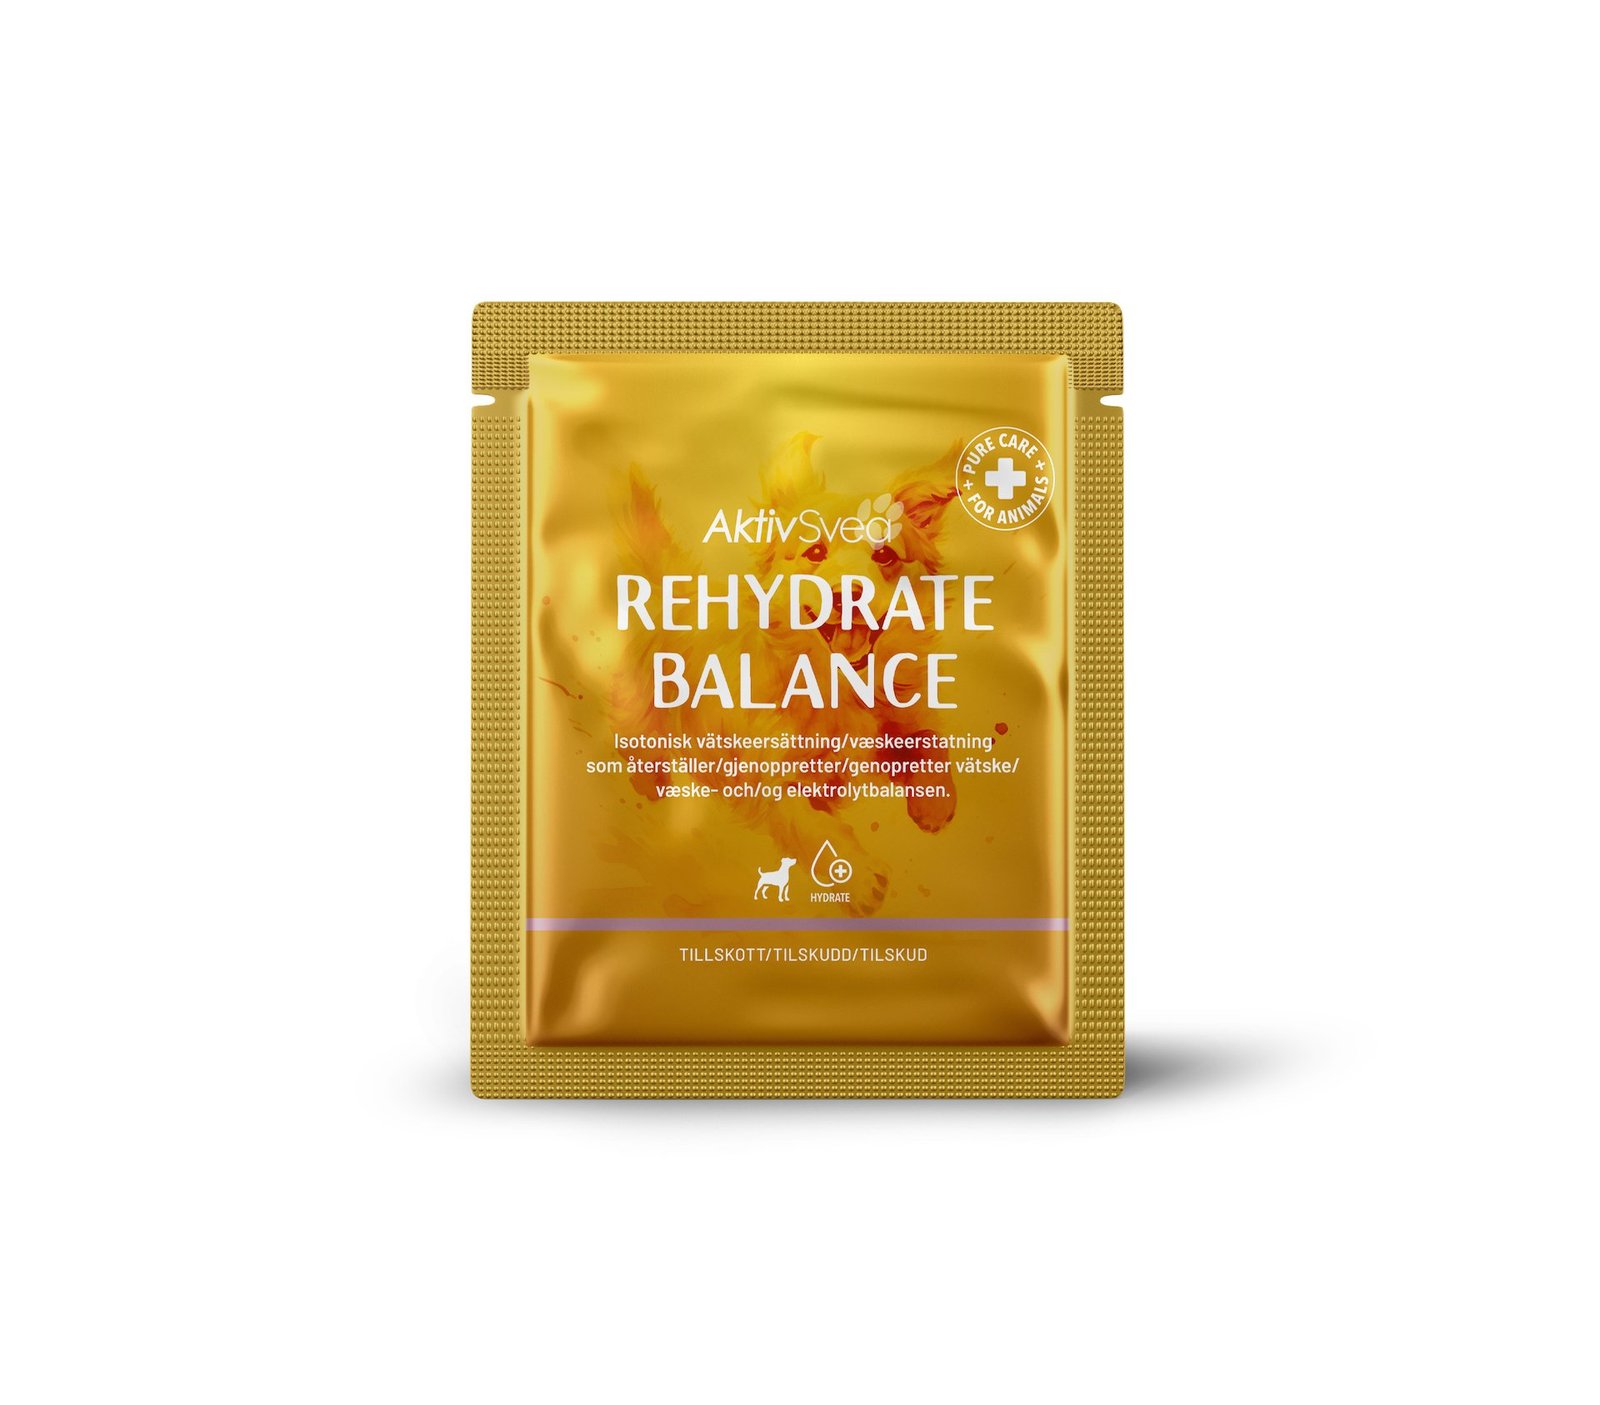 AktivSvea Rehydrate Balance 120 dospåsar